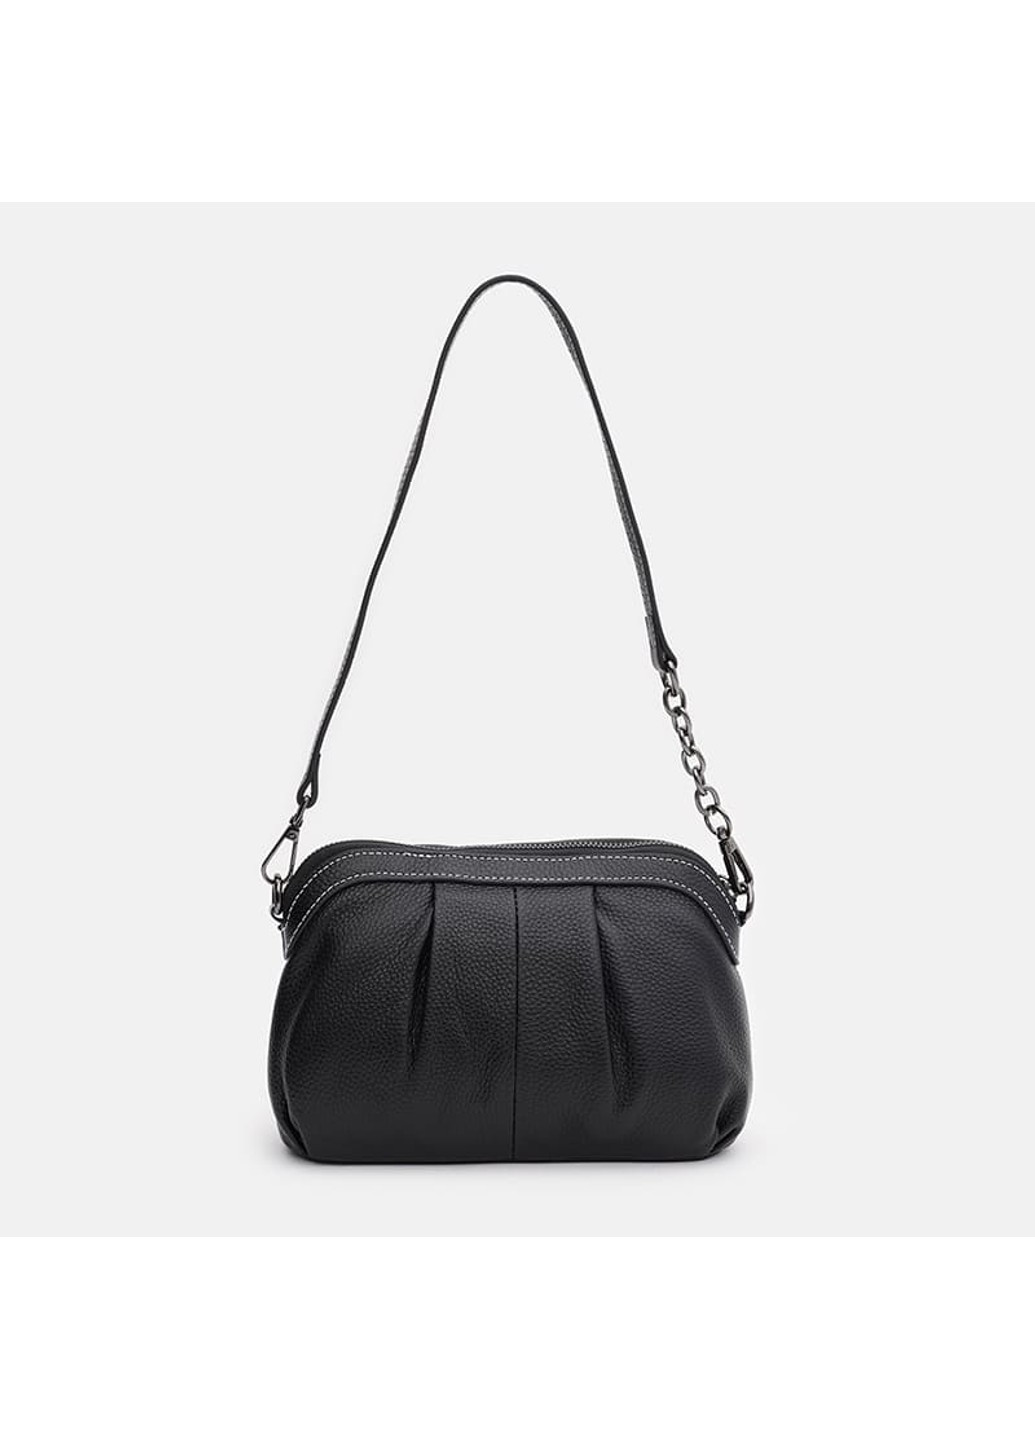 Женская кожаная сумка K16688bl-black Keizer (274535909)